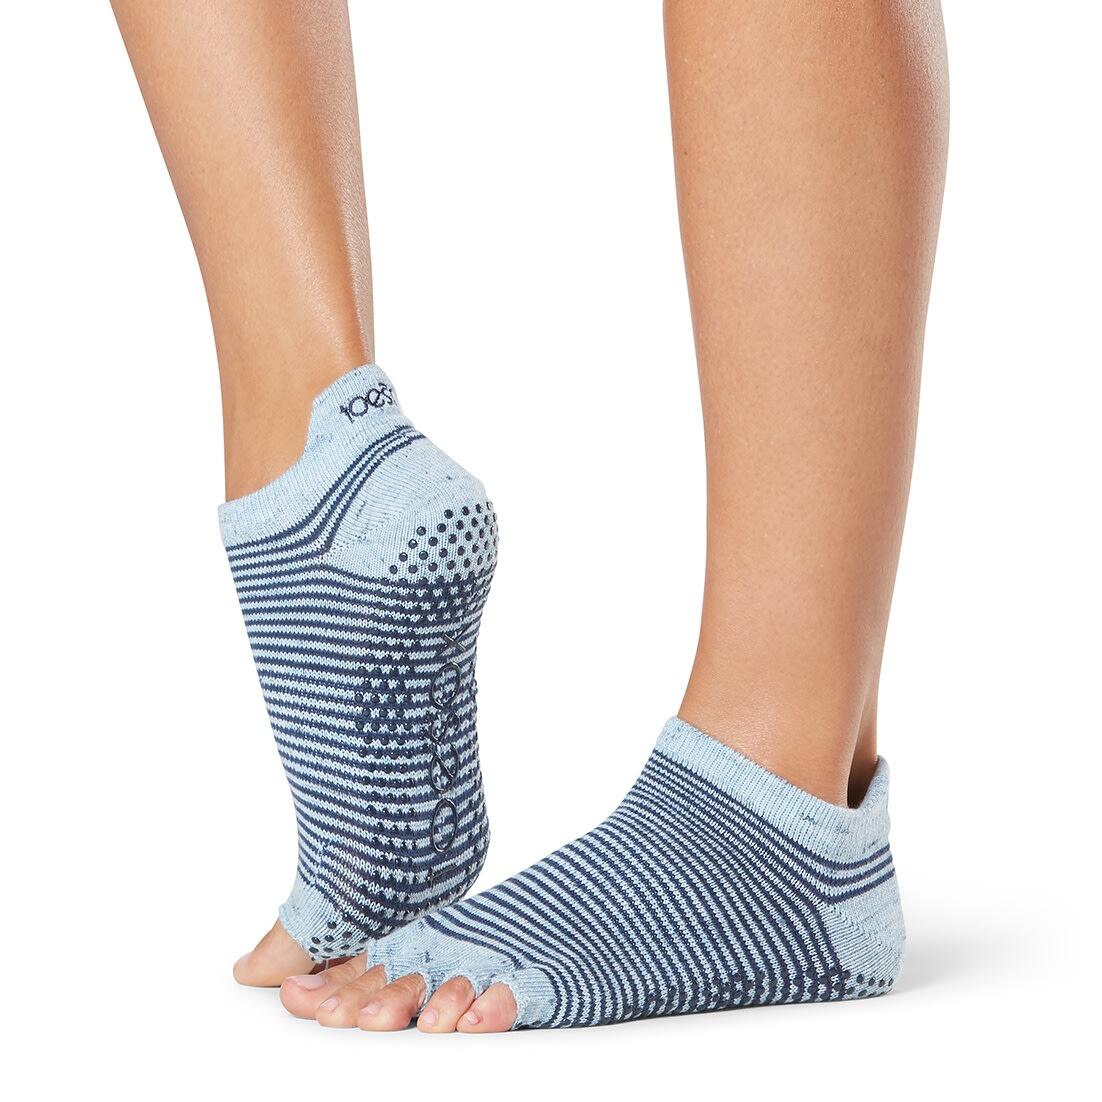 FITNESS-MAD Womens/Ladies Bluebell Half Toe Socks (Light Blue/Navy)